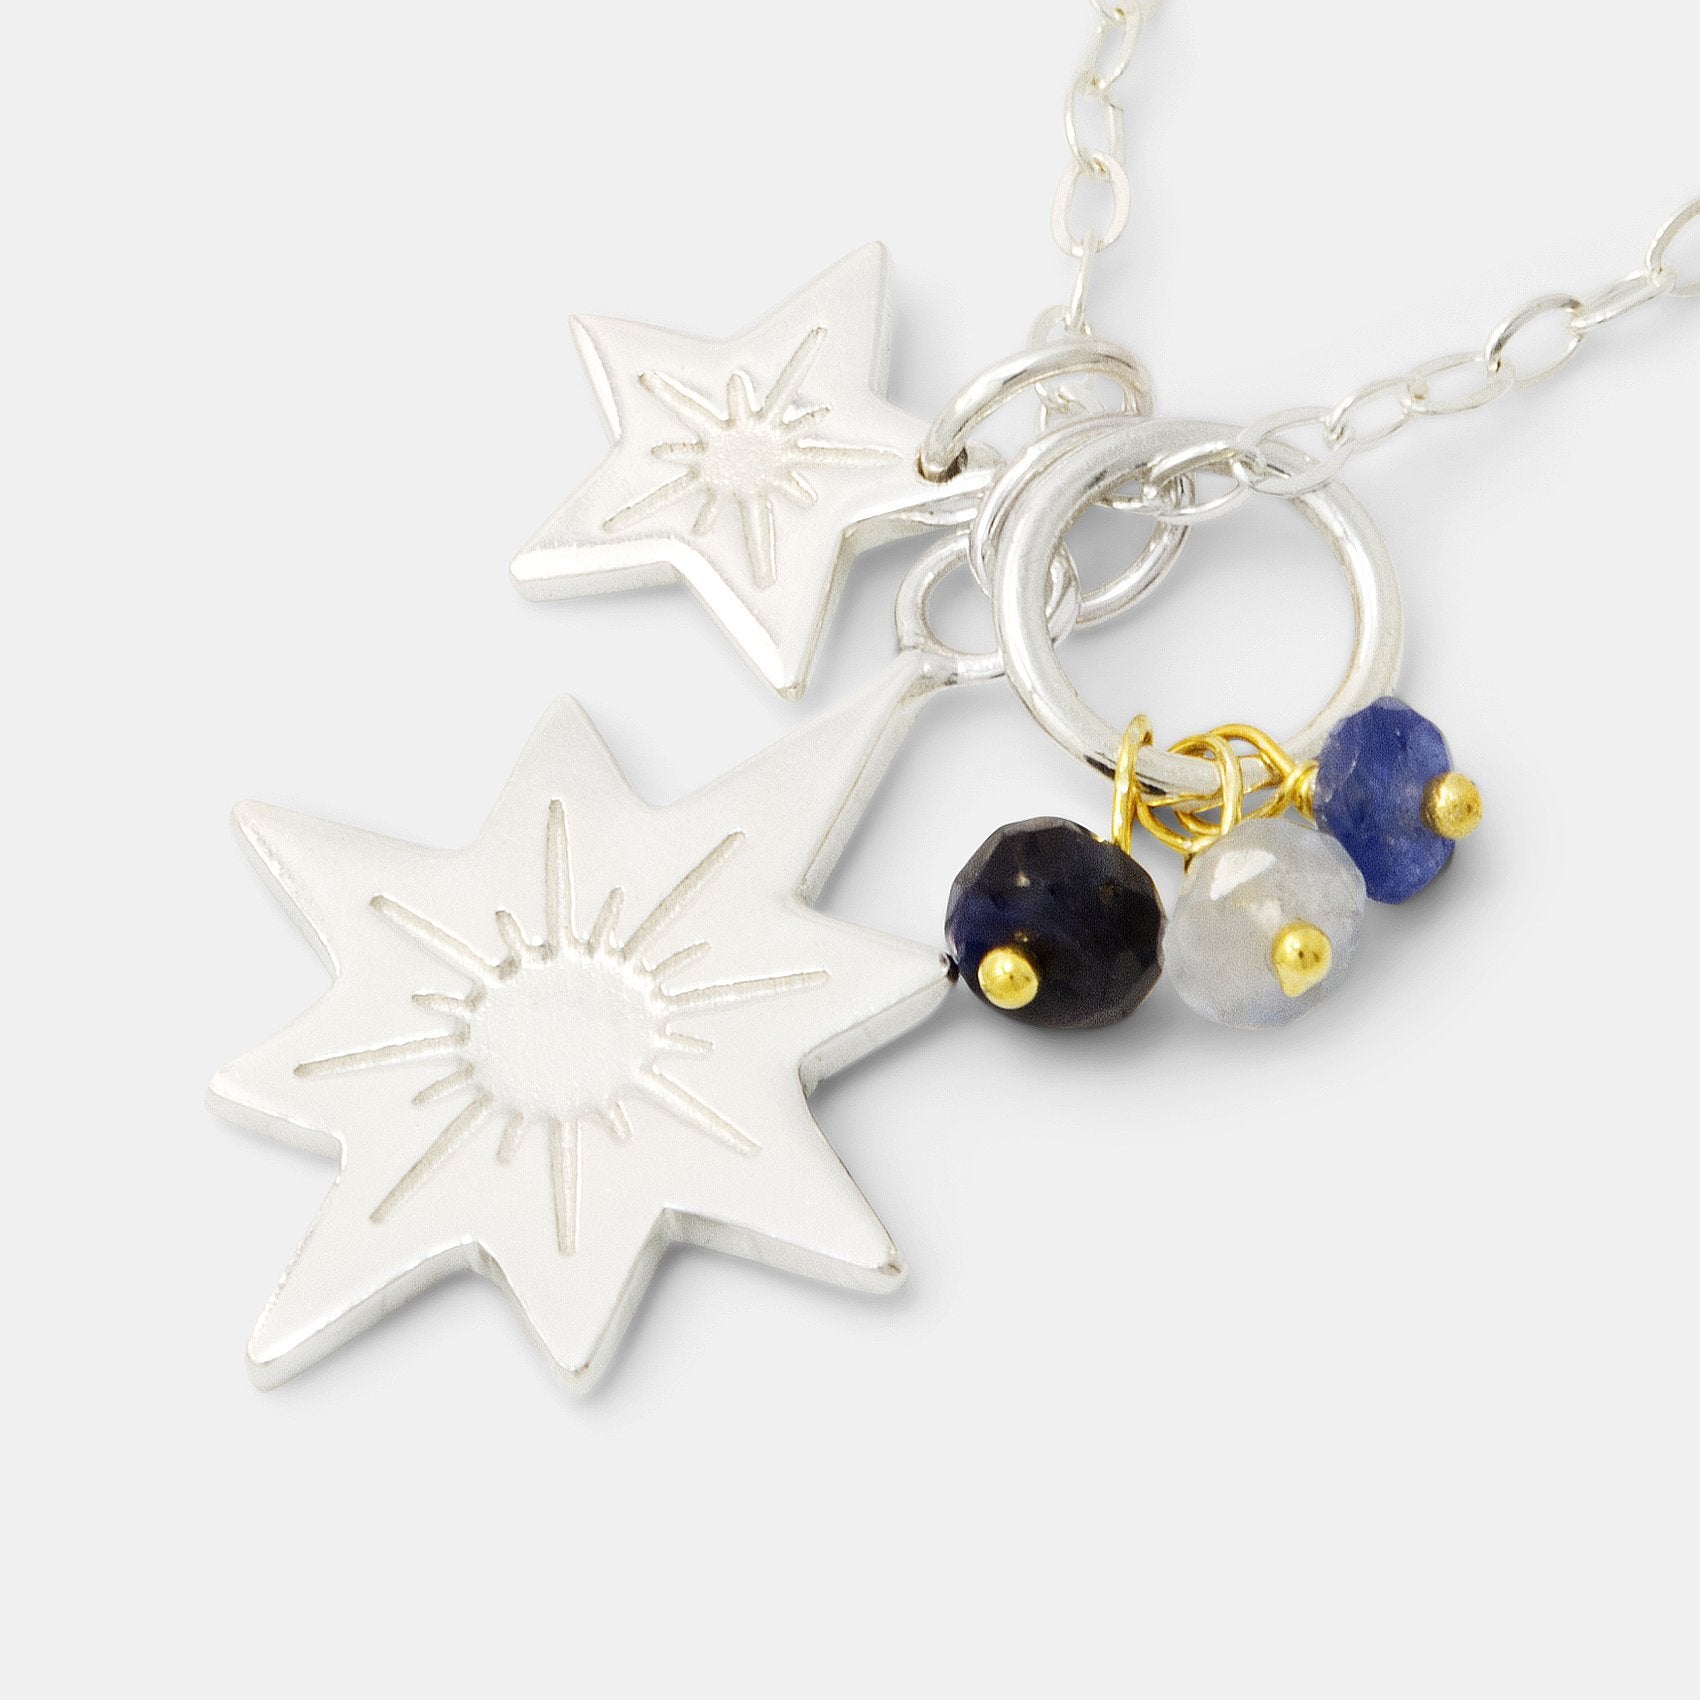 Stars & sapphires necklace - Simone Walsh Jewellery Australia